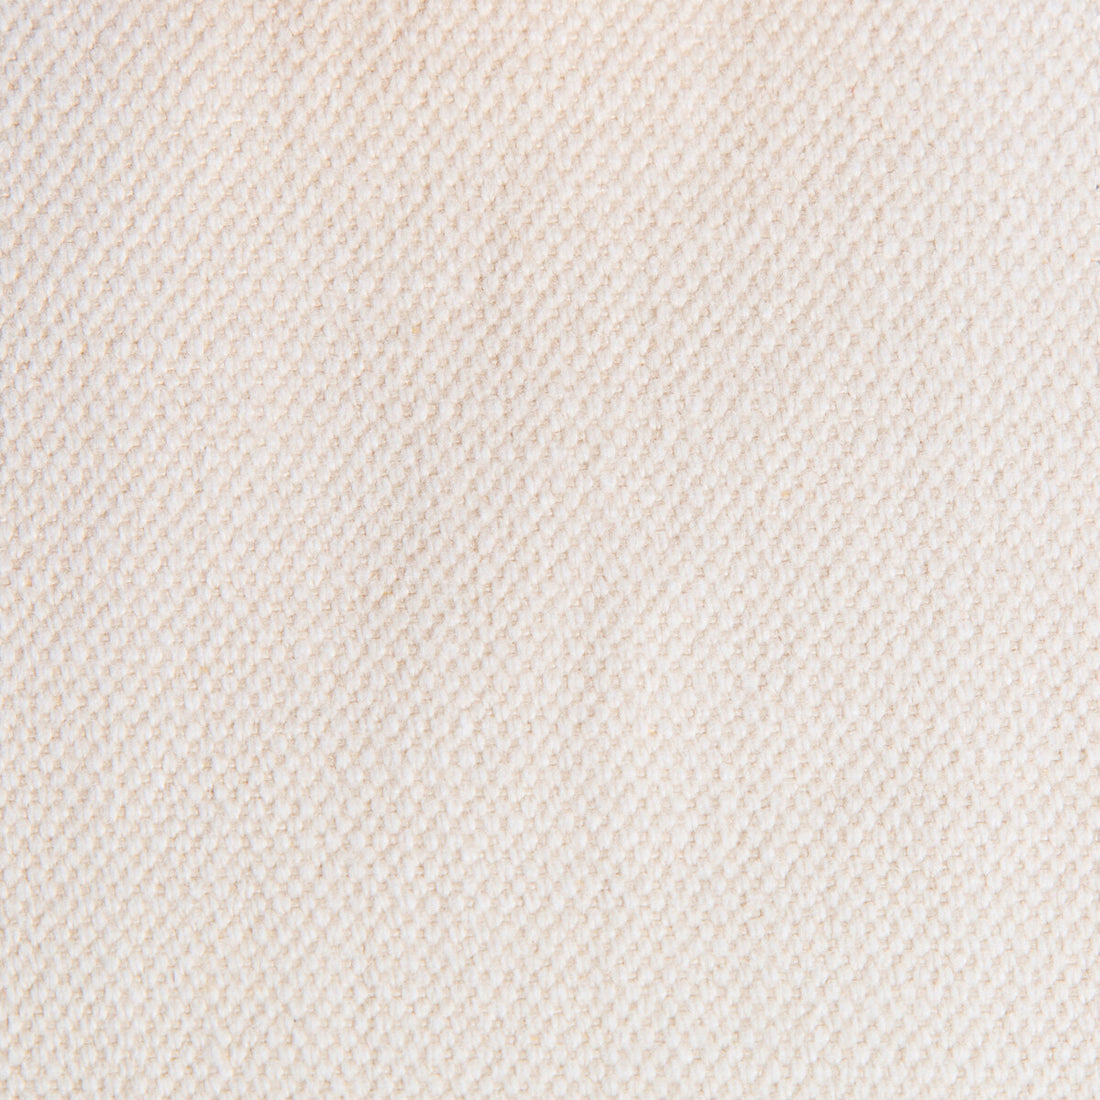 Lima fabric in blanco color - pattern GDT5616.001.0 - by Gaston y Daniela in the Gaston Nuevo Mundo collection